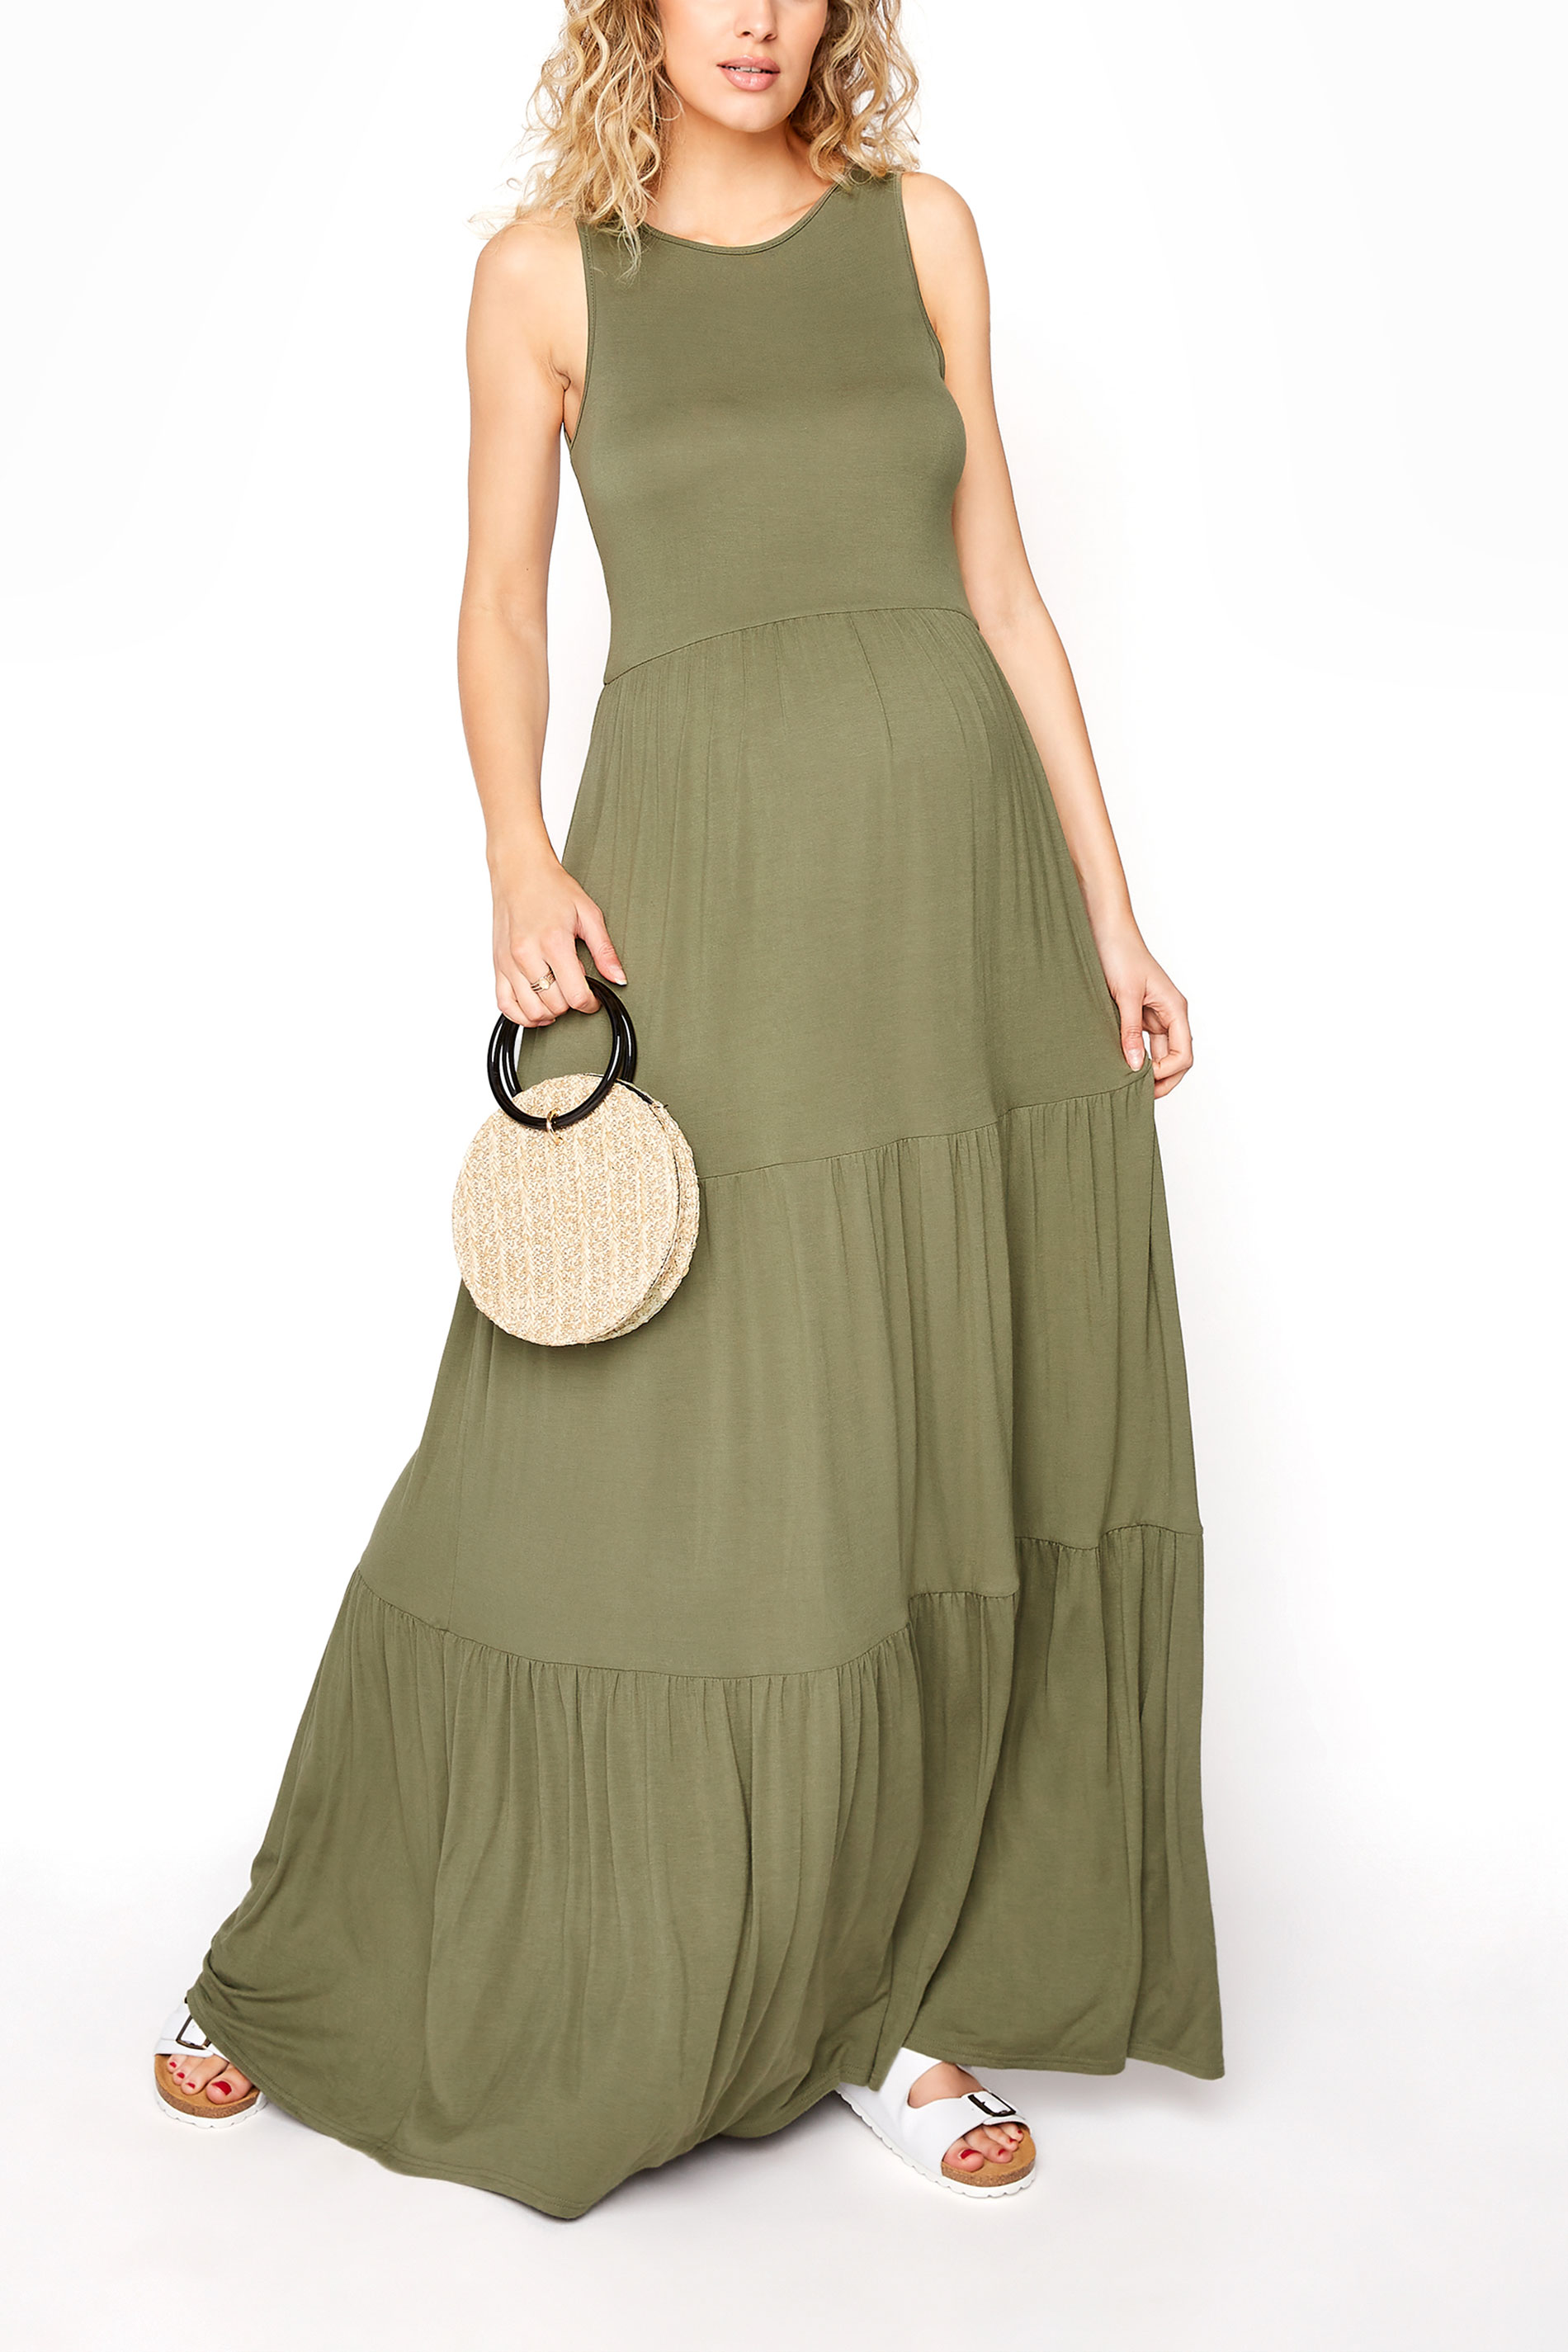 LTS Maternity Khaki Green Tiered Maxi Dress | Long Tall Sally